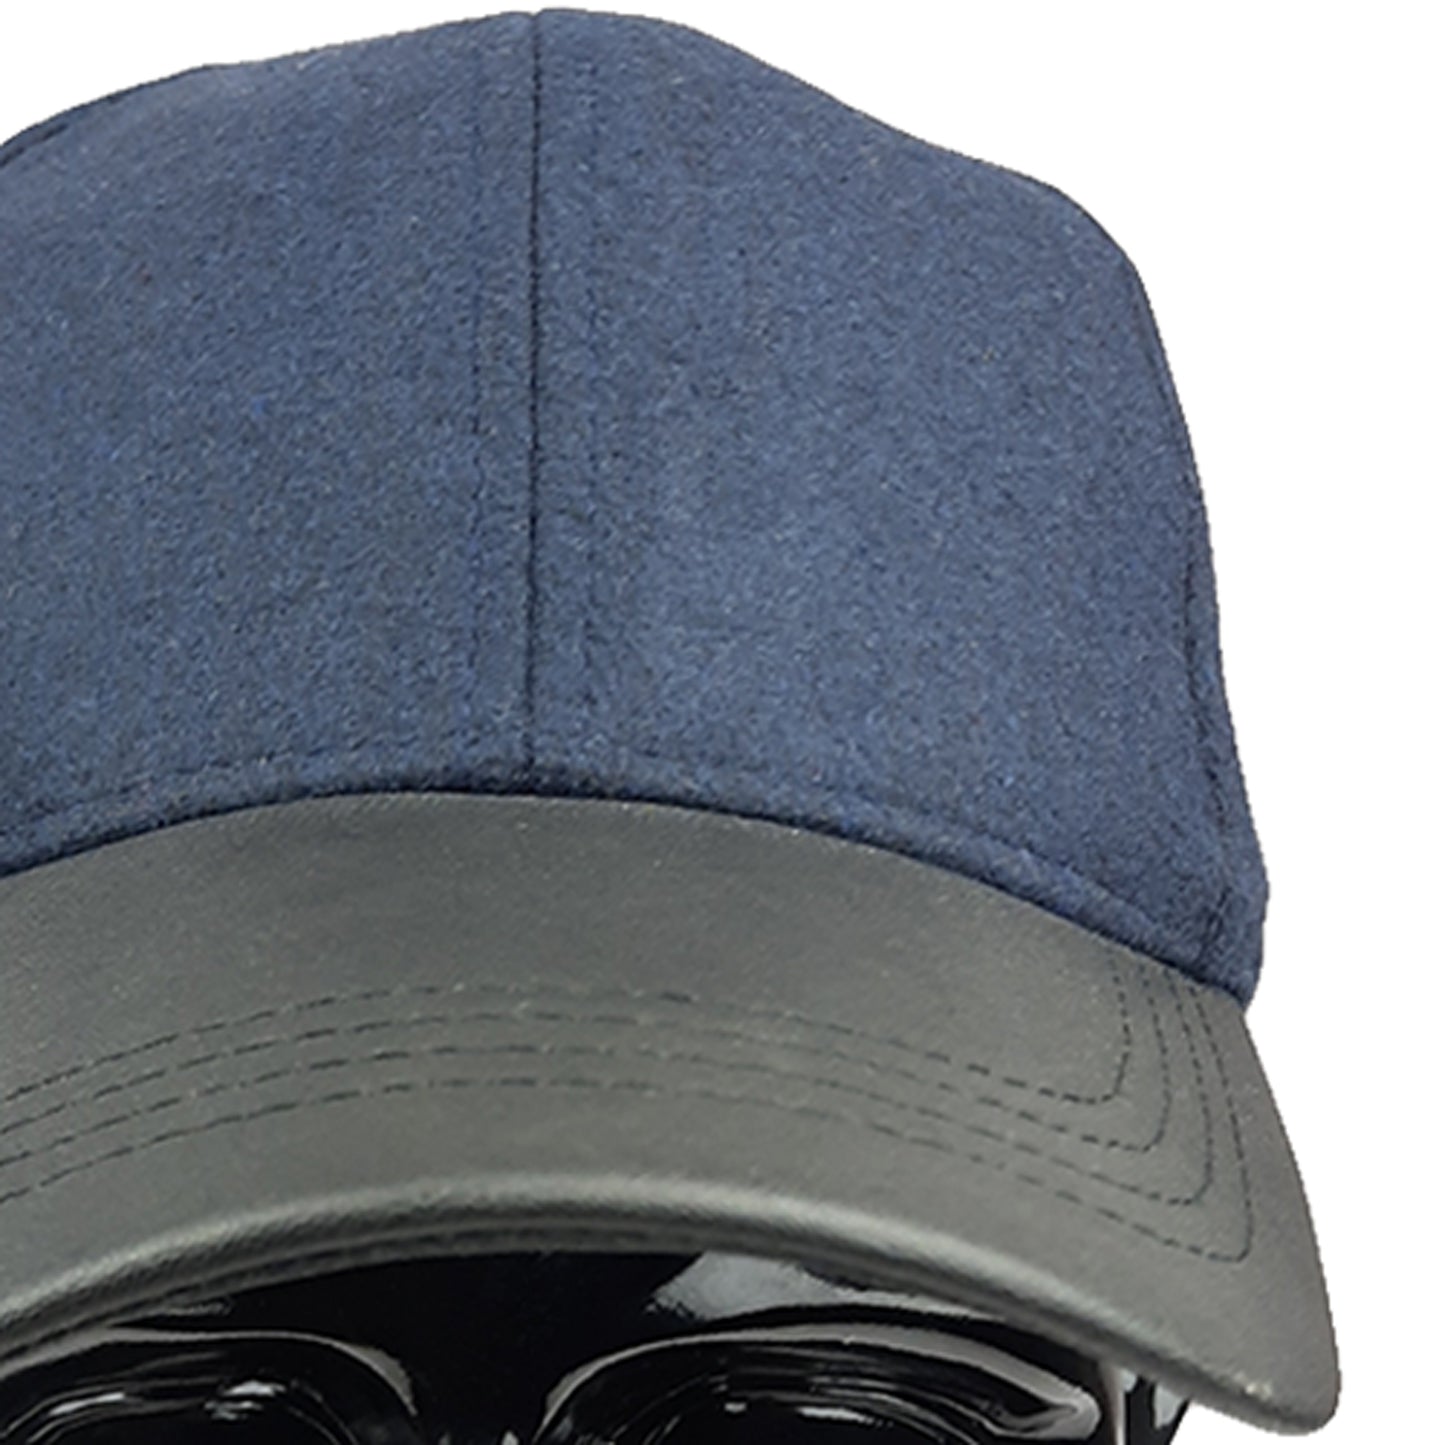 Jokey Blue hat with Leatherette 1020 BLUE